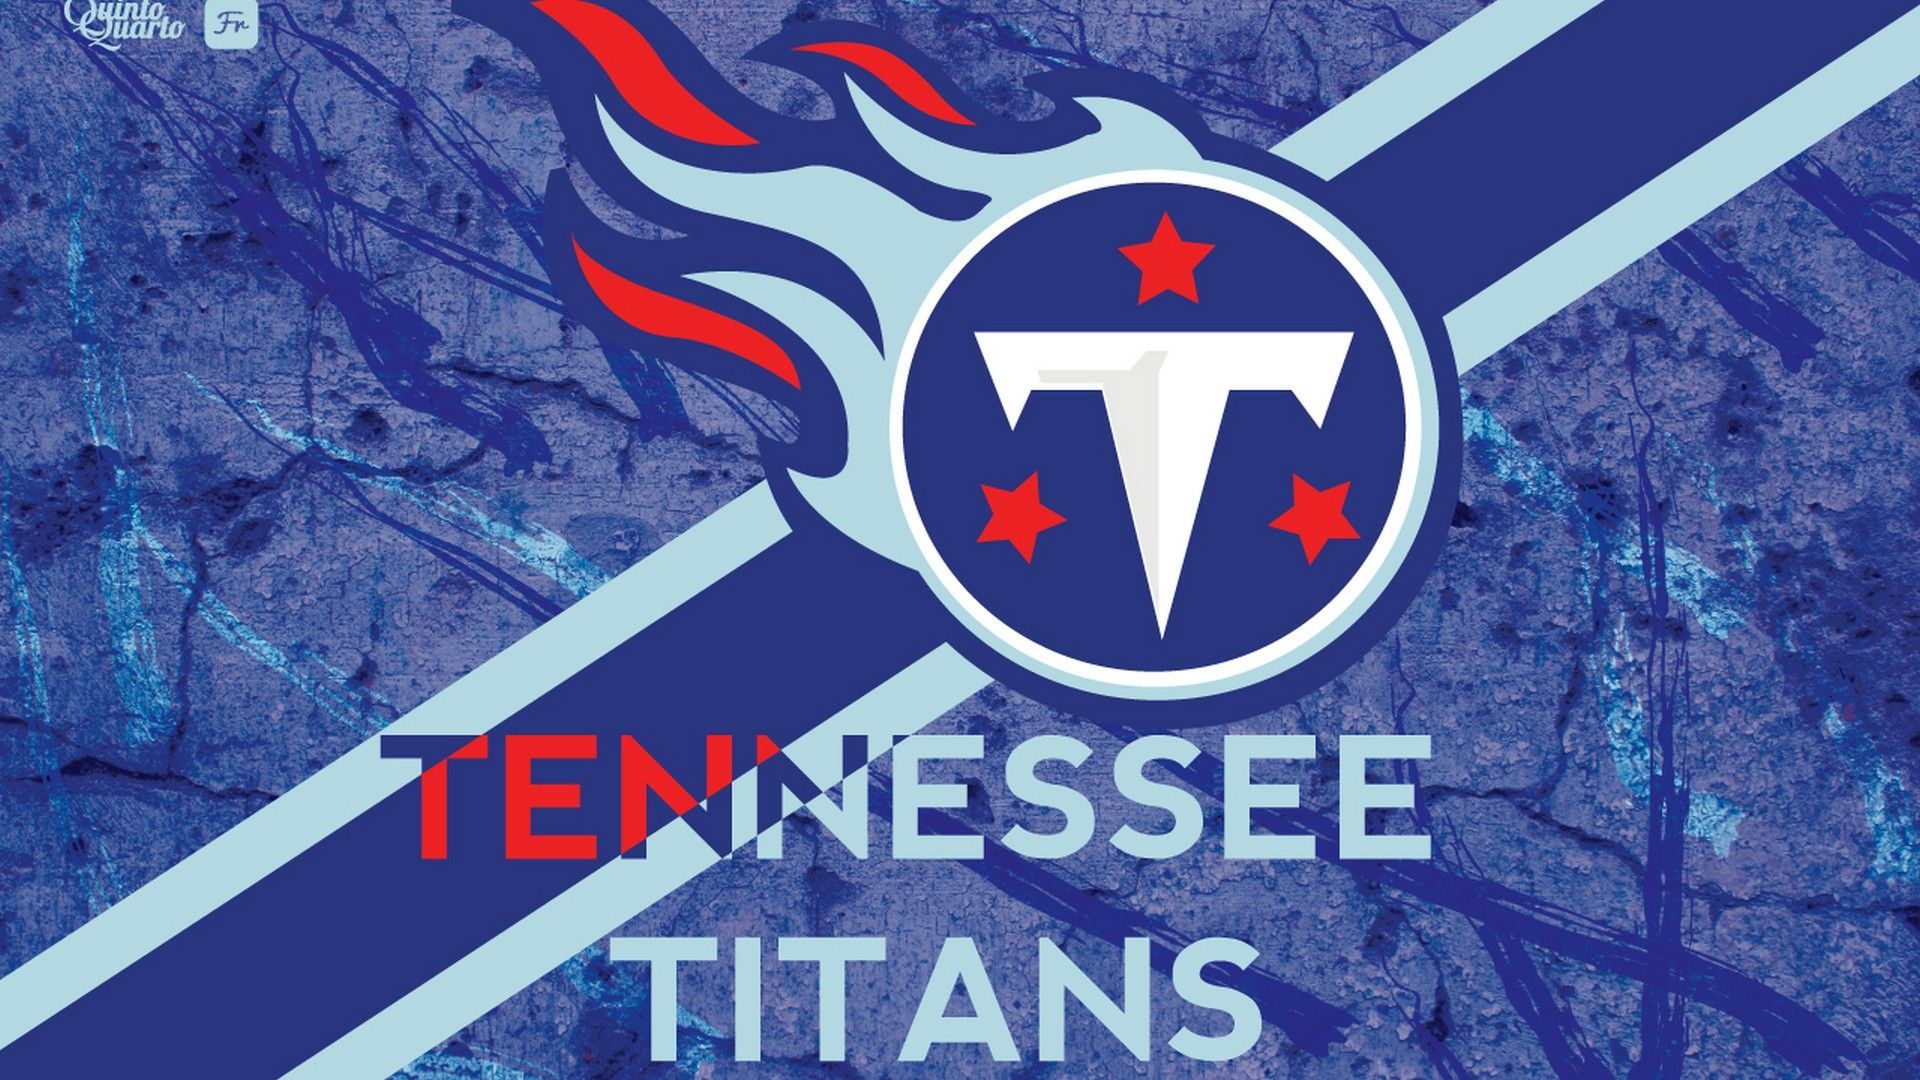 Wallpaper HD Tennessee Titans NFL Football Wallpaper. Tennessee titans, Nfl football wallpaper, Football wallpaper